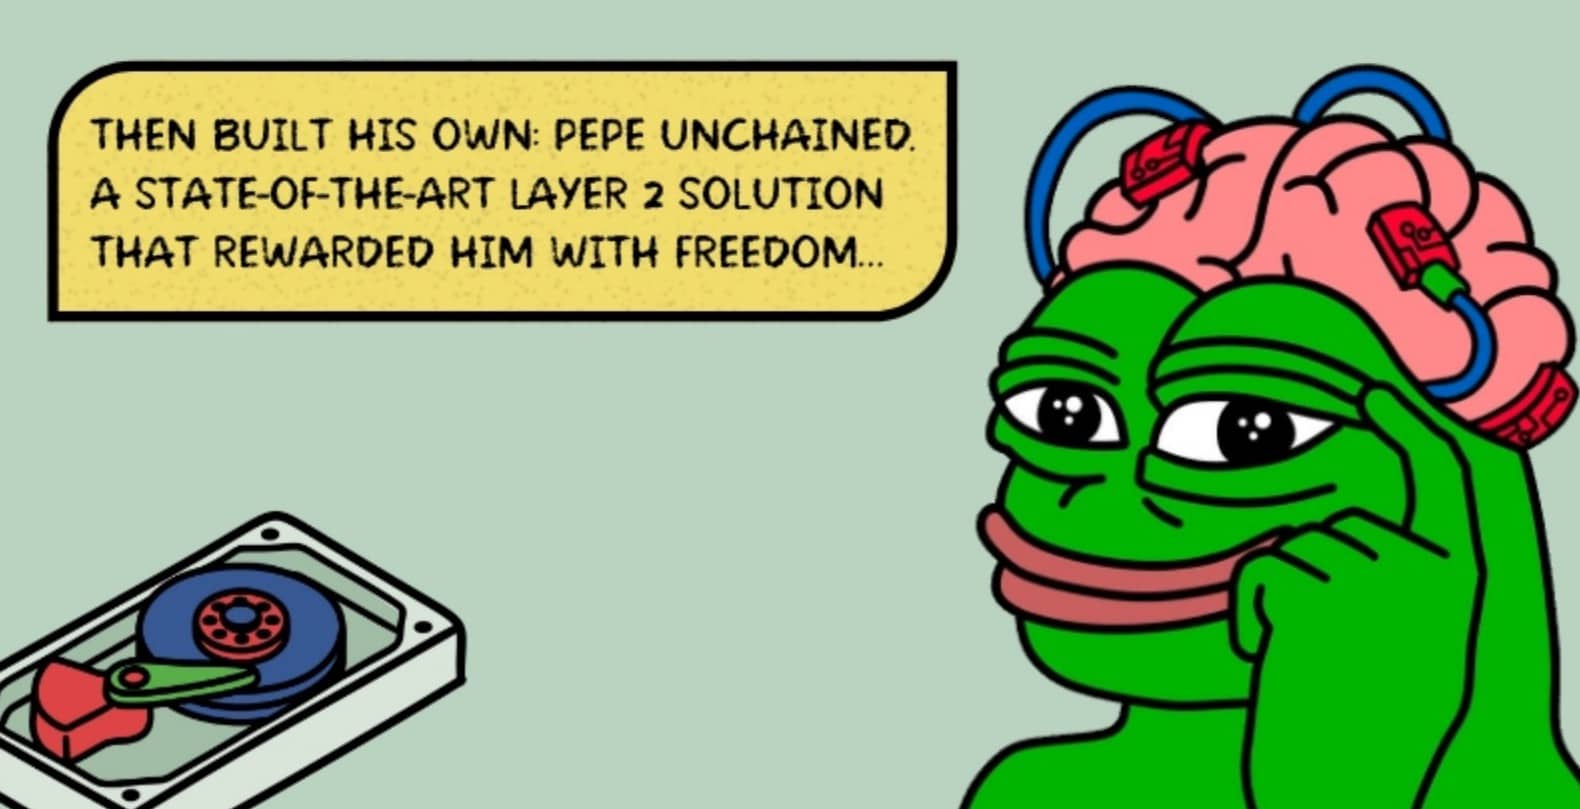 Pepe Unchained